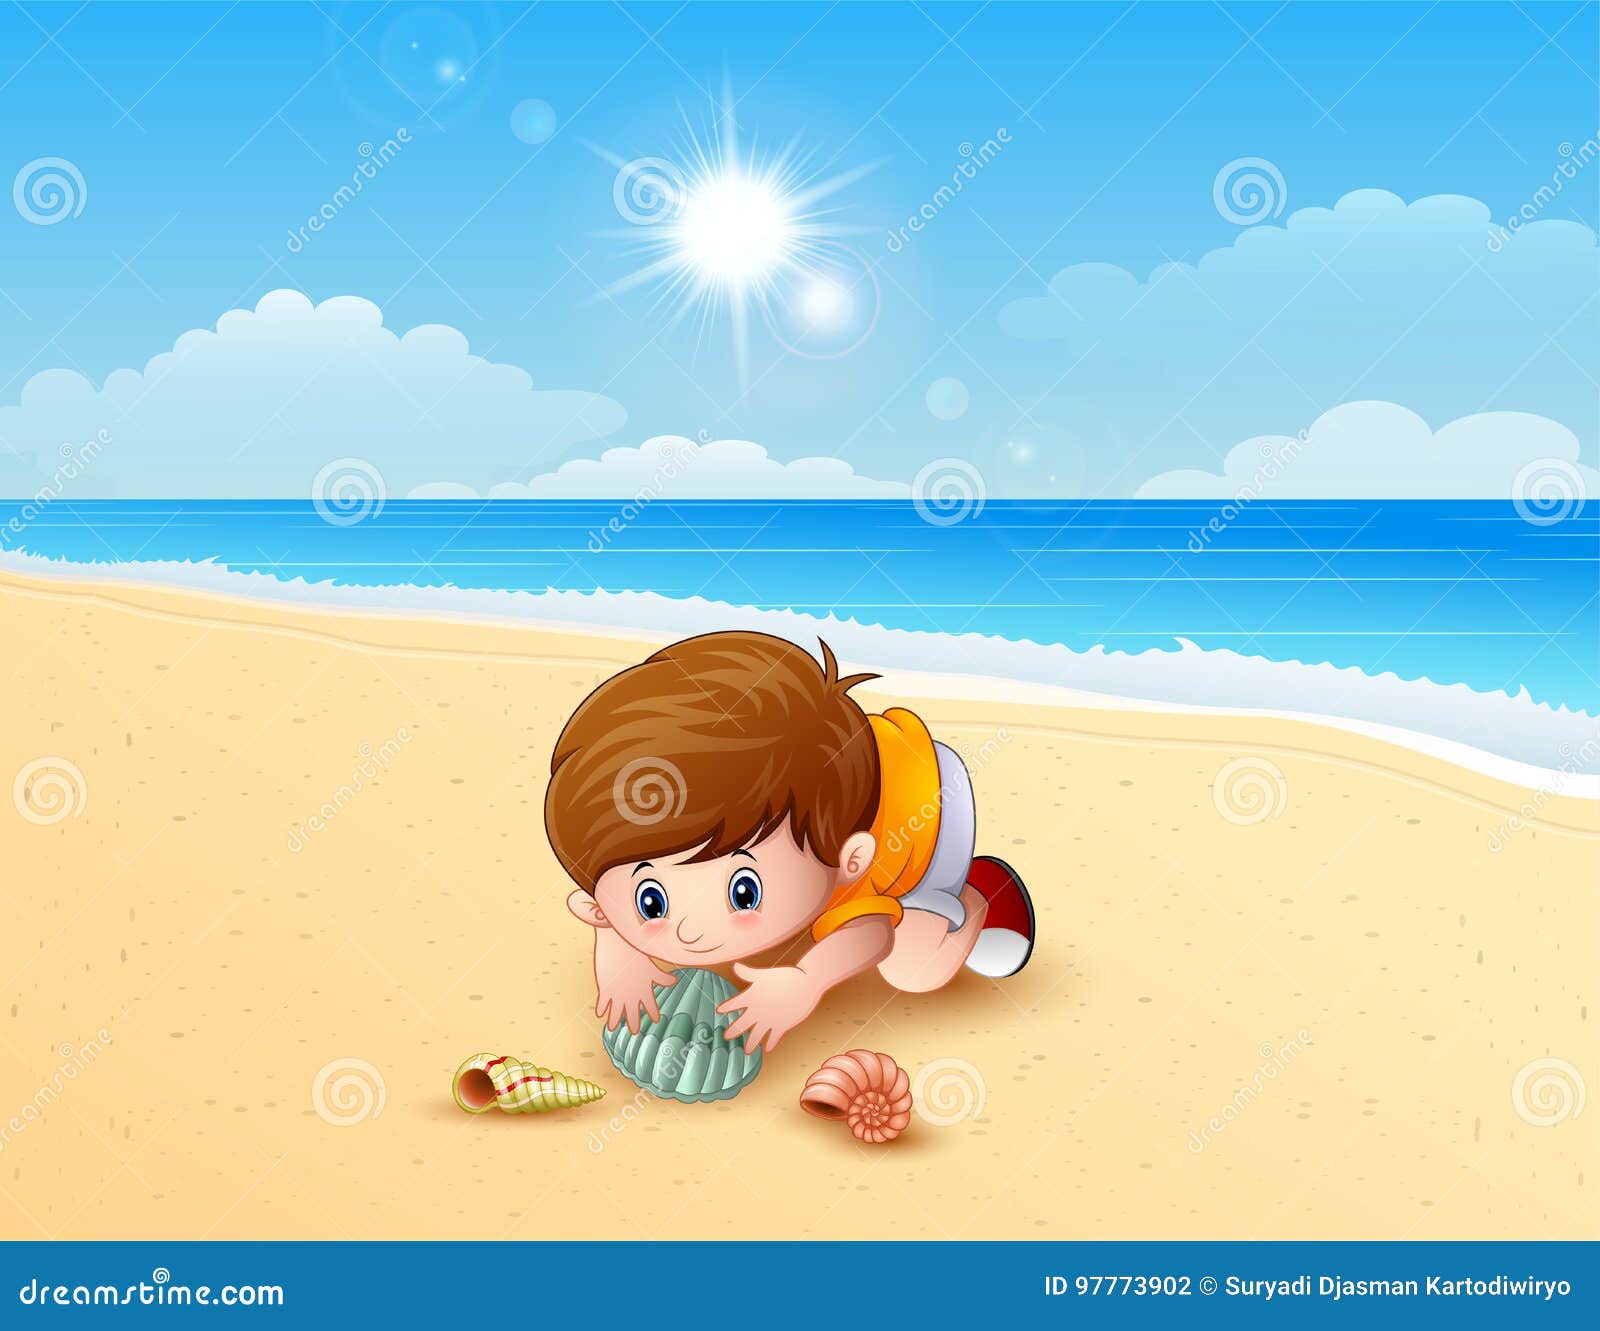 boy playing a sea shells at the beach